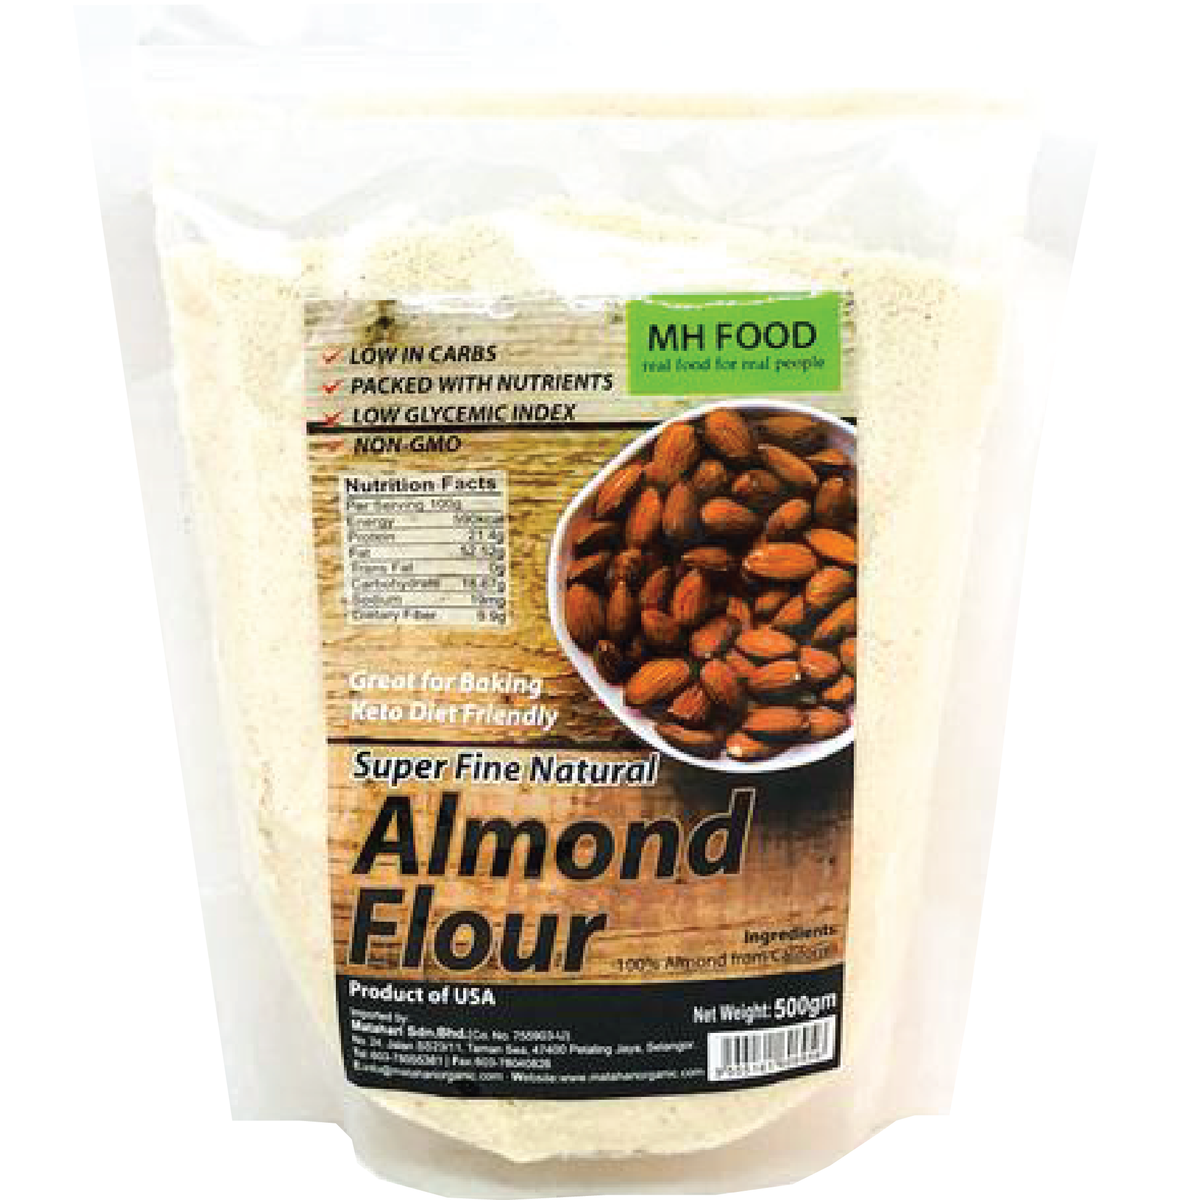 Super Fine Natural
Almond Flour (500GM)